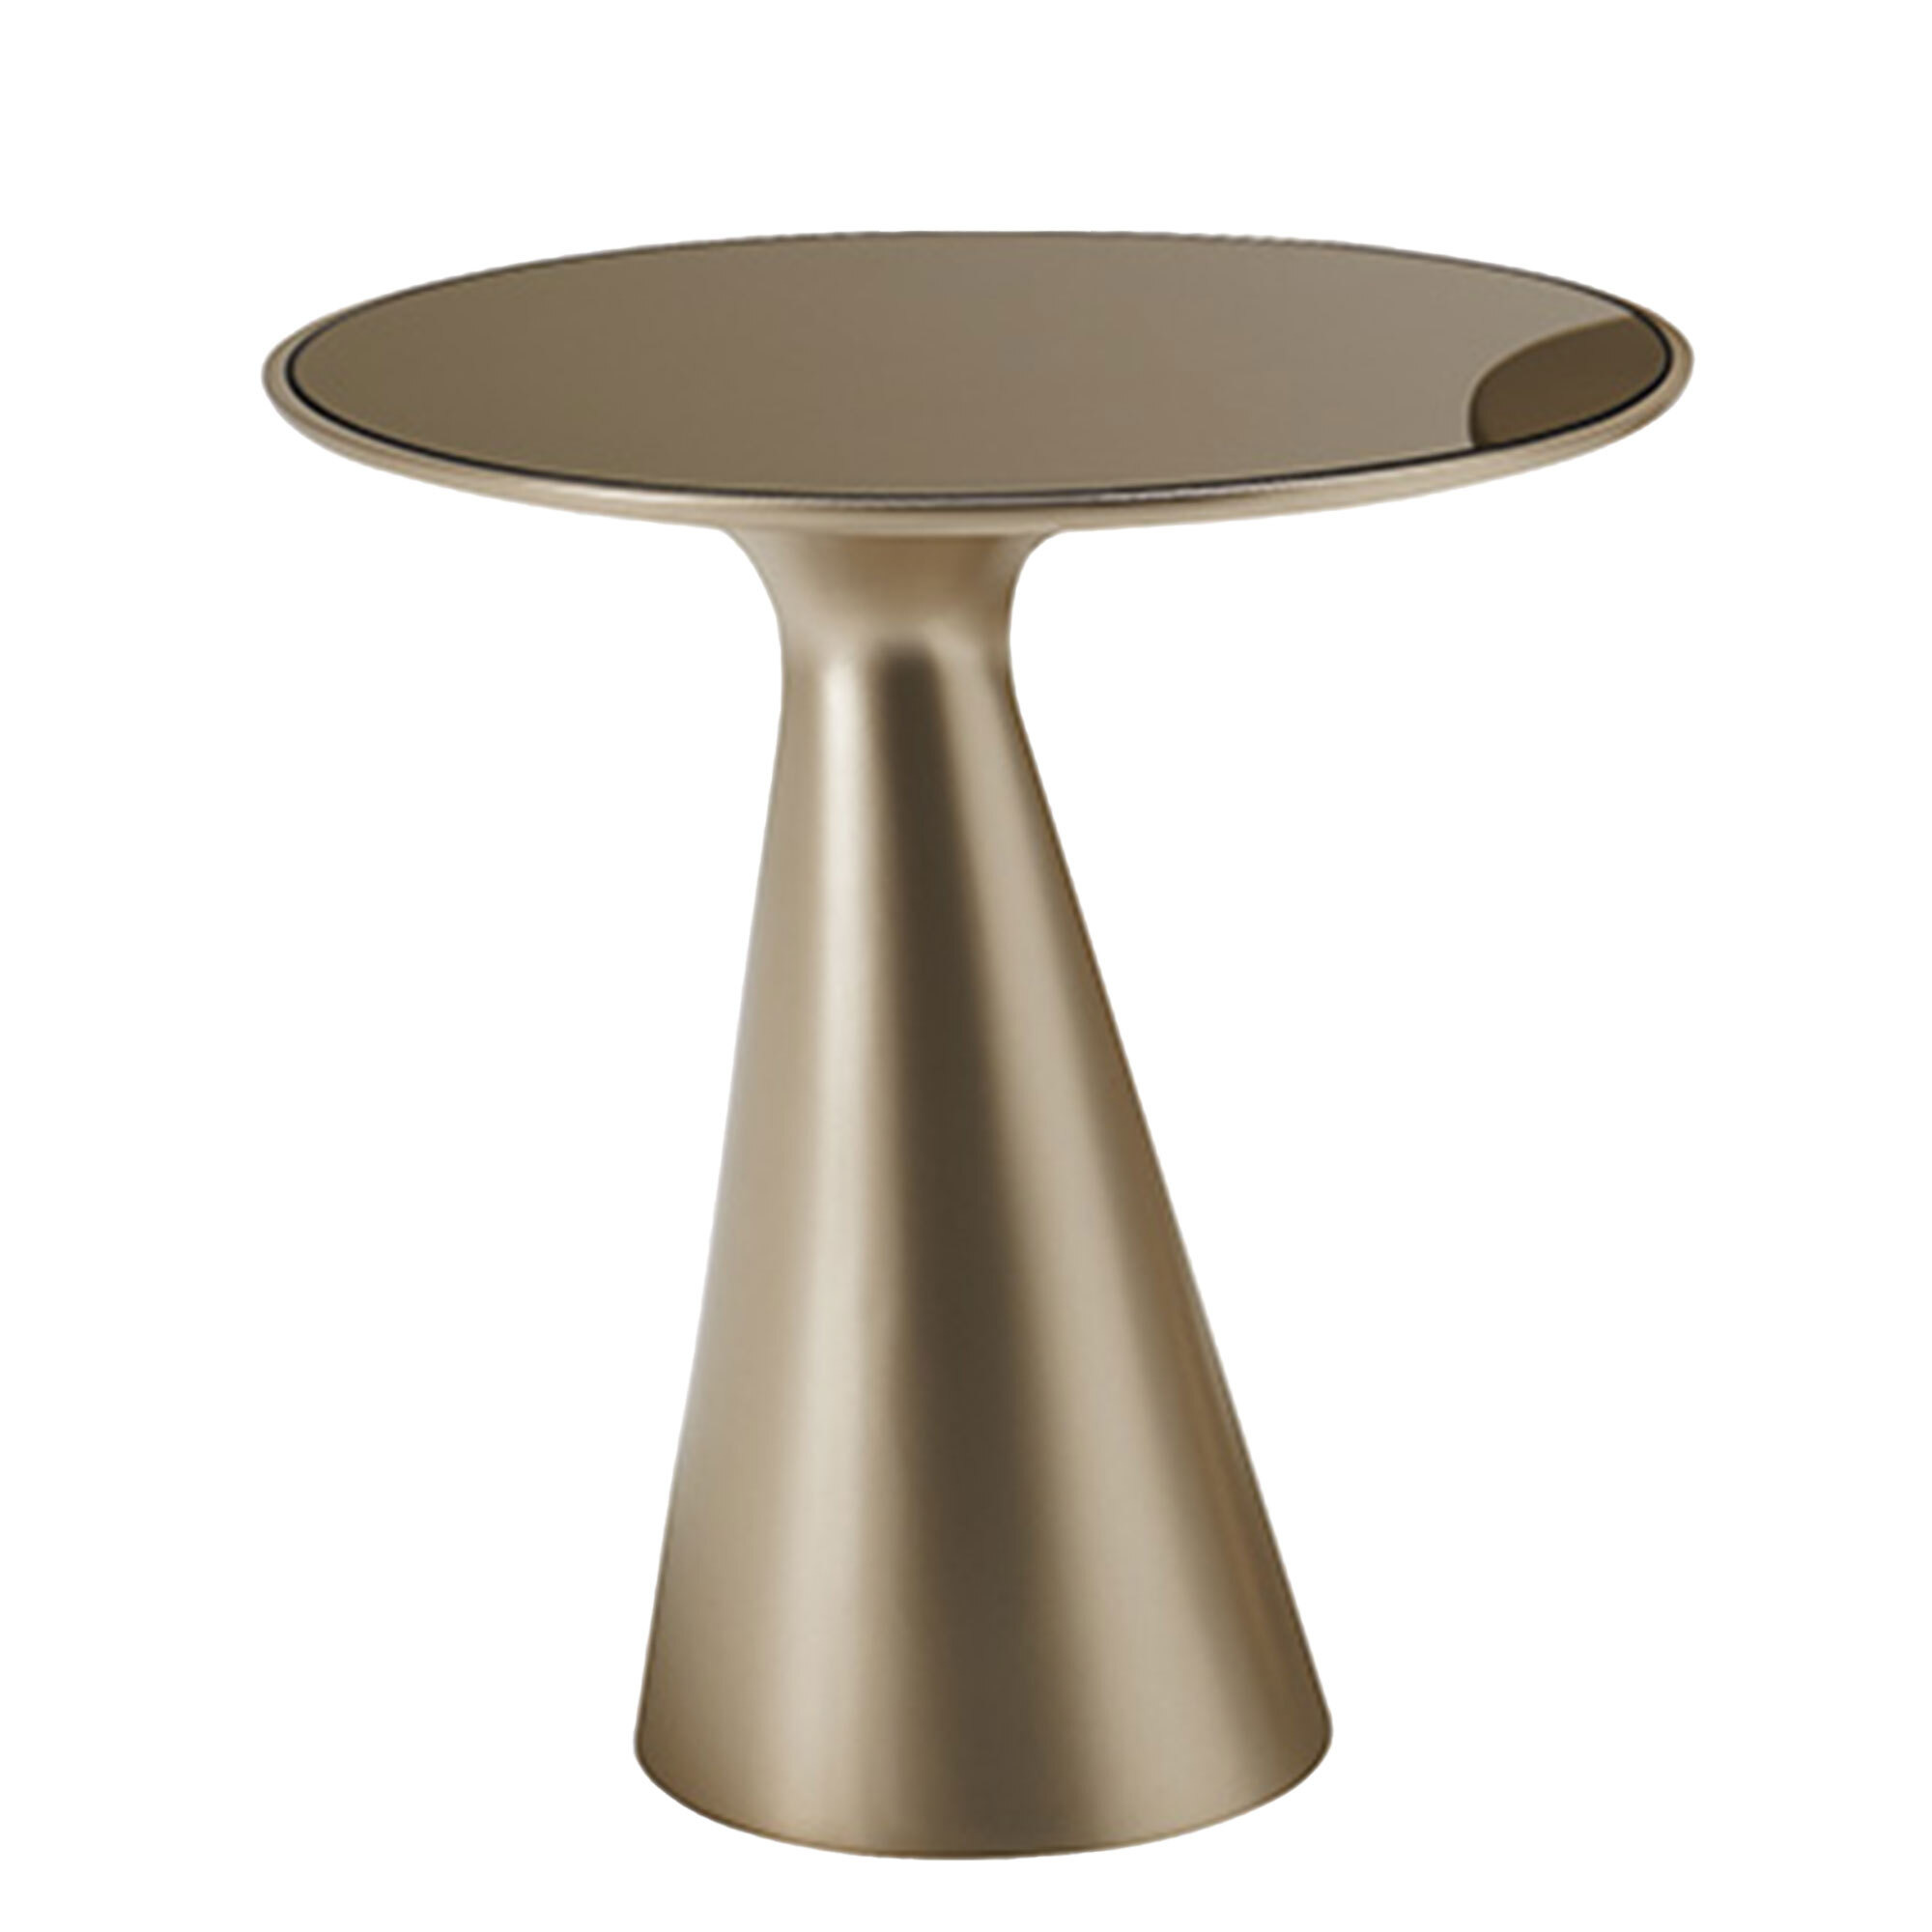 Cattelan Italia Peyote Coffee Table, Round, Bronze Glass - Barker & Stonehouse - image 1